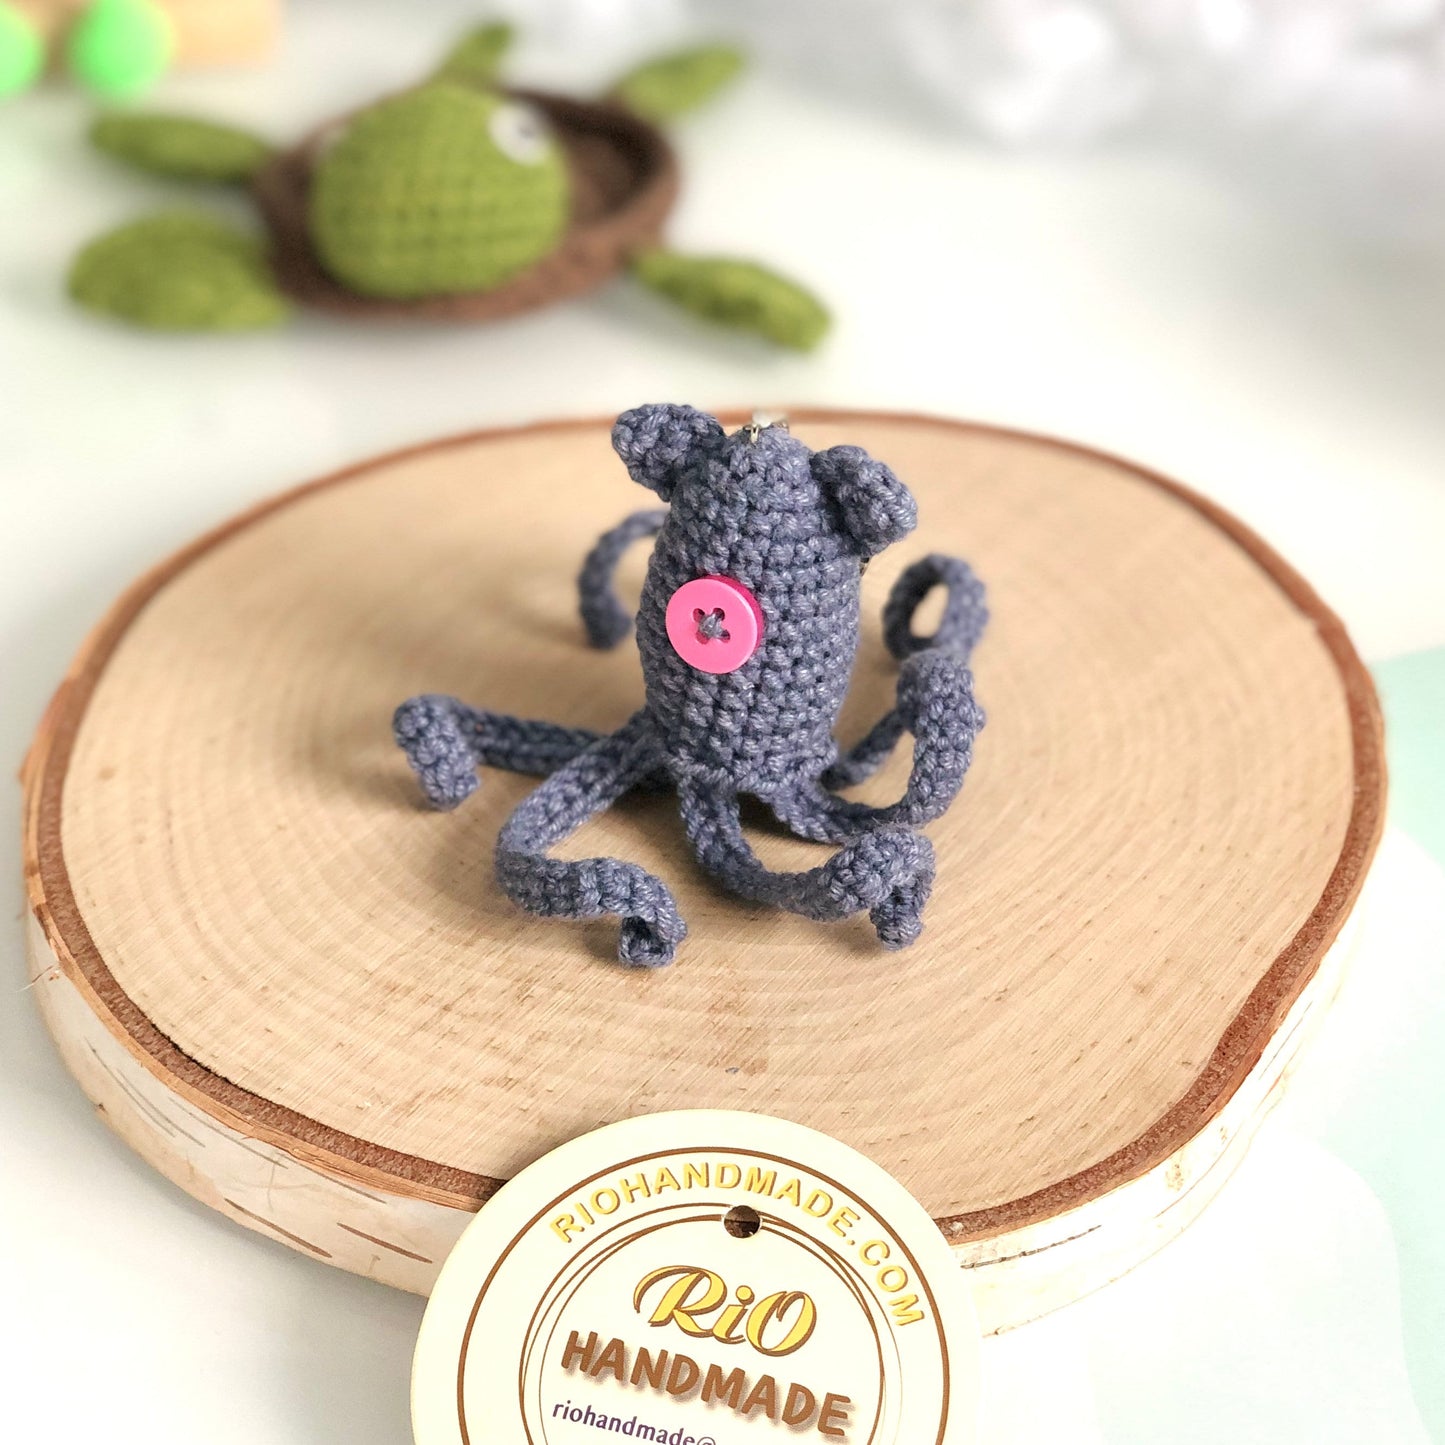 Handmade octopus crochet keychain, amigurumi octopus, car rear view hanging, cute gift